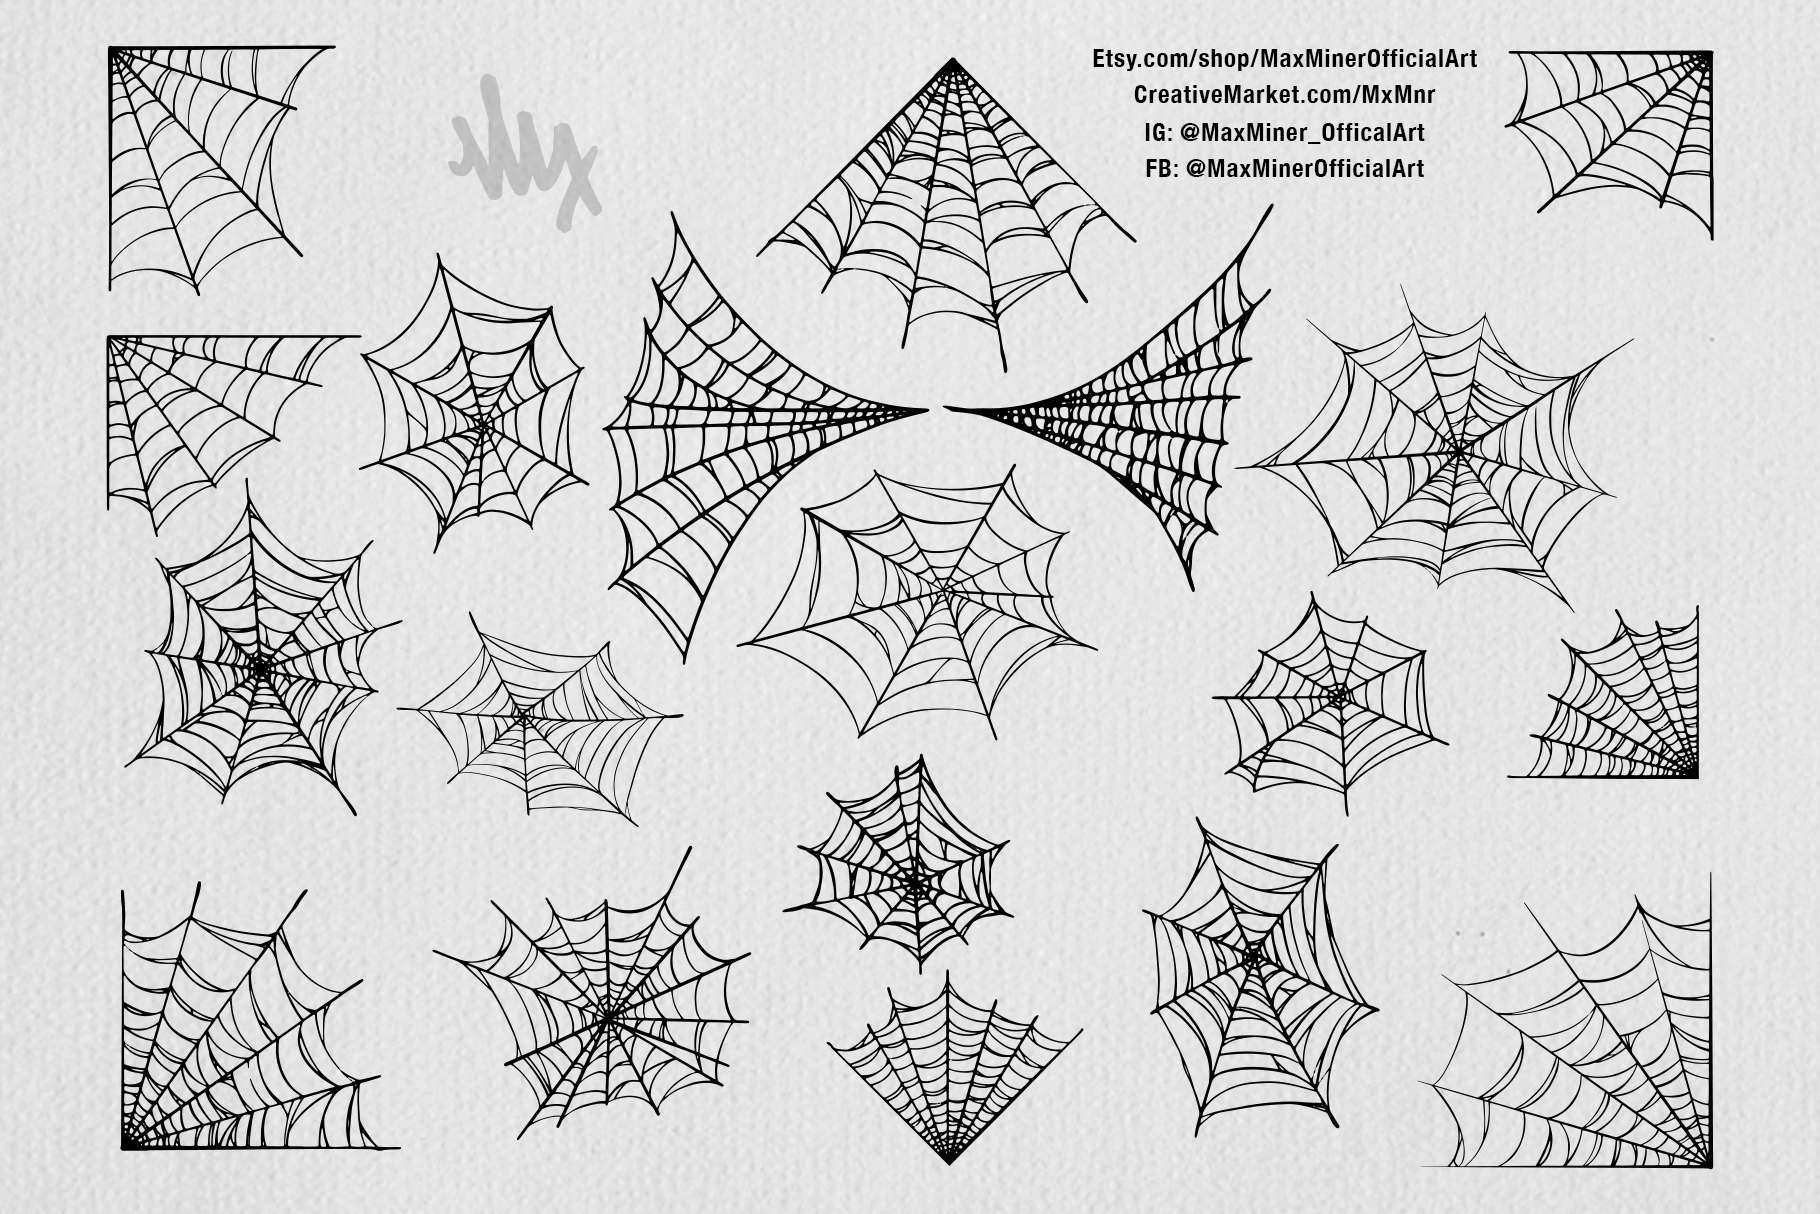 Spooky Spiders Handdrawn Halloween Art Pack Vector & PSD